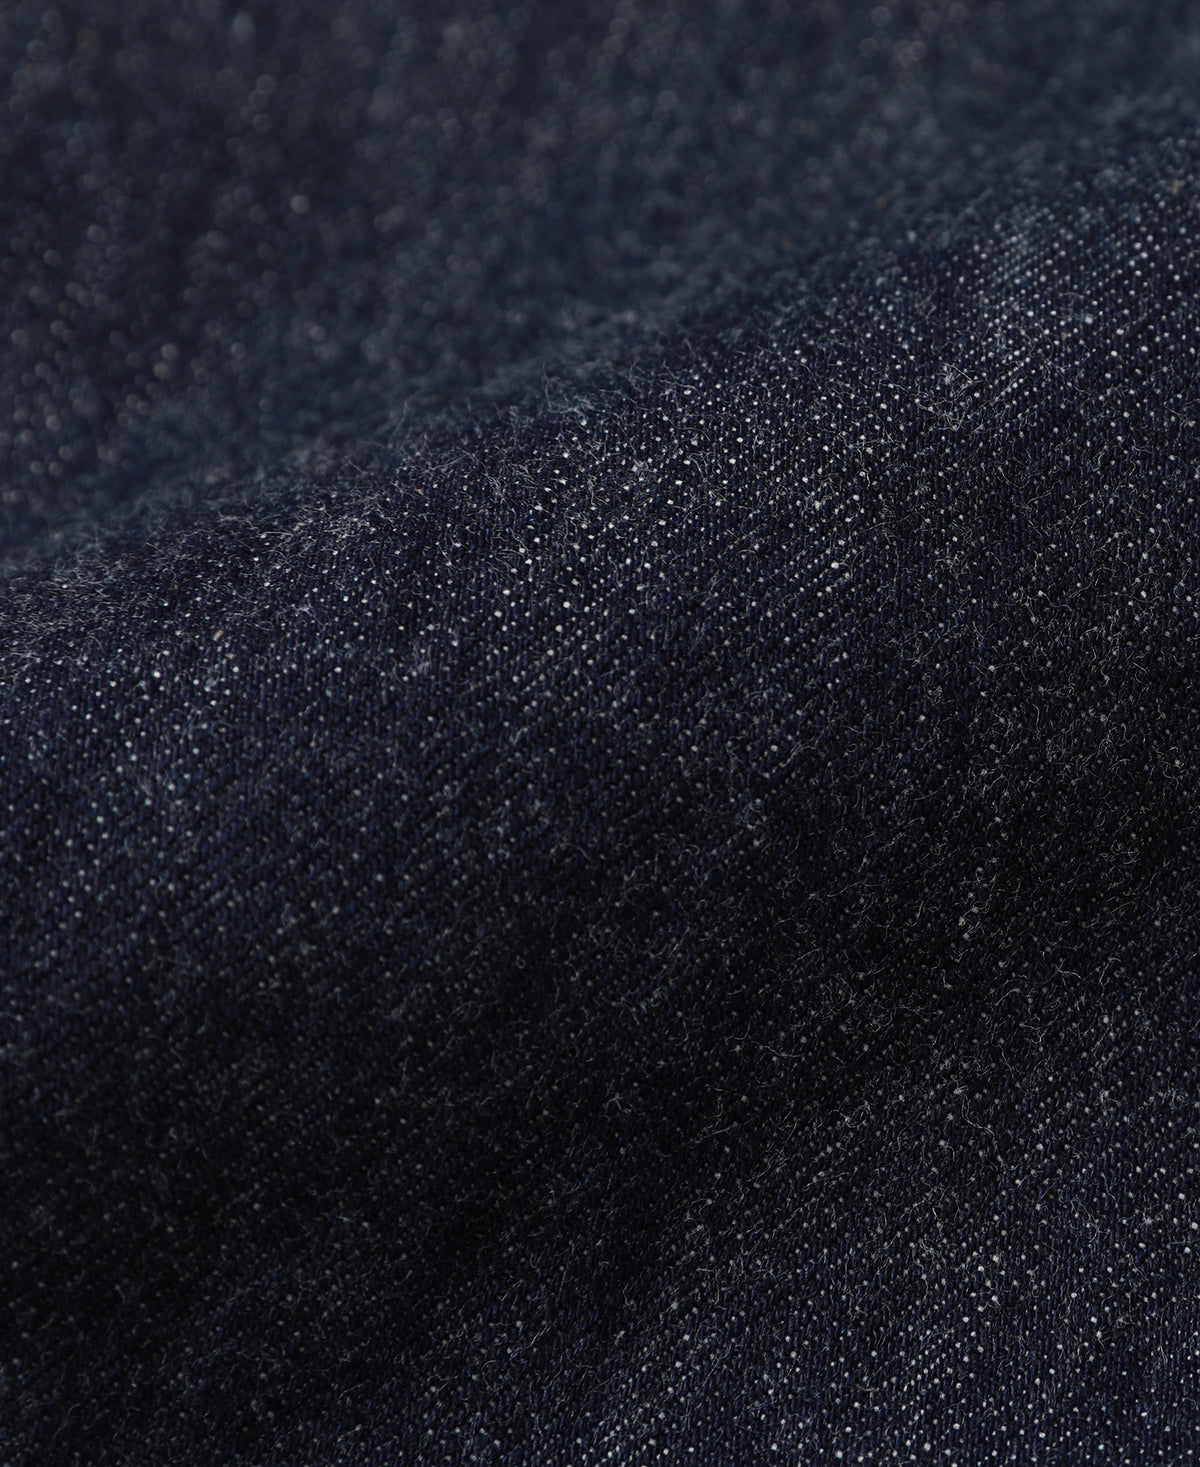 Lot 47801XX 1947 Selvedge Denim Jeans